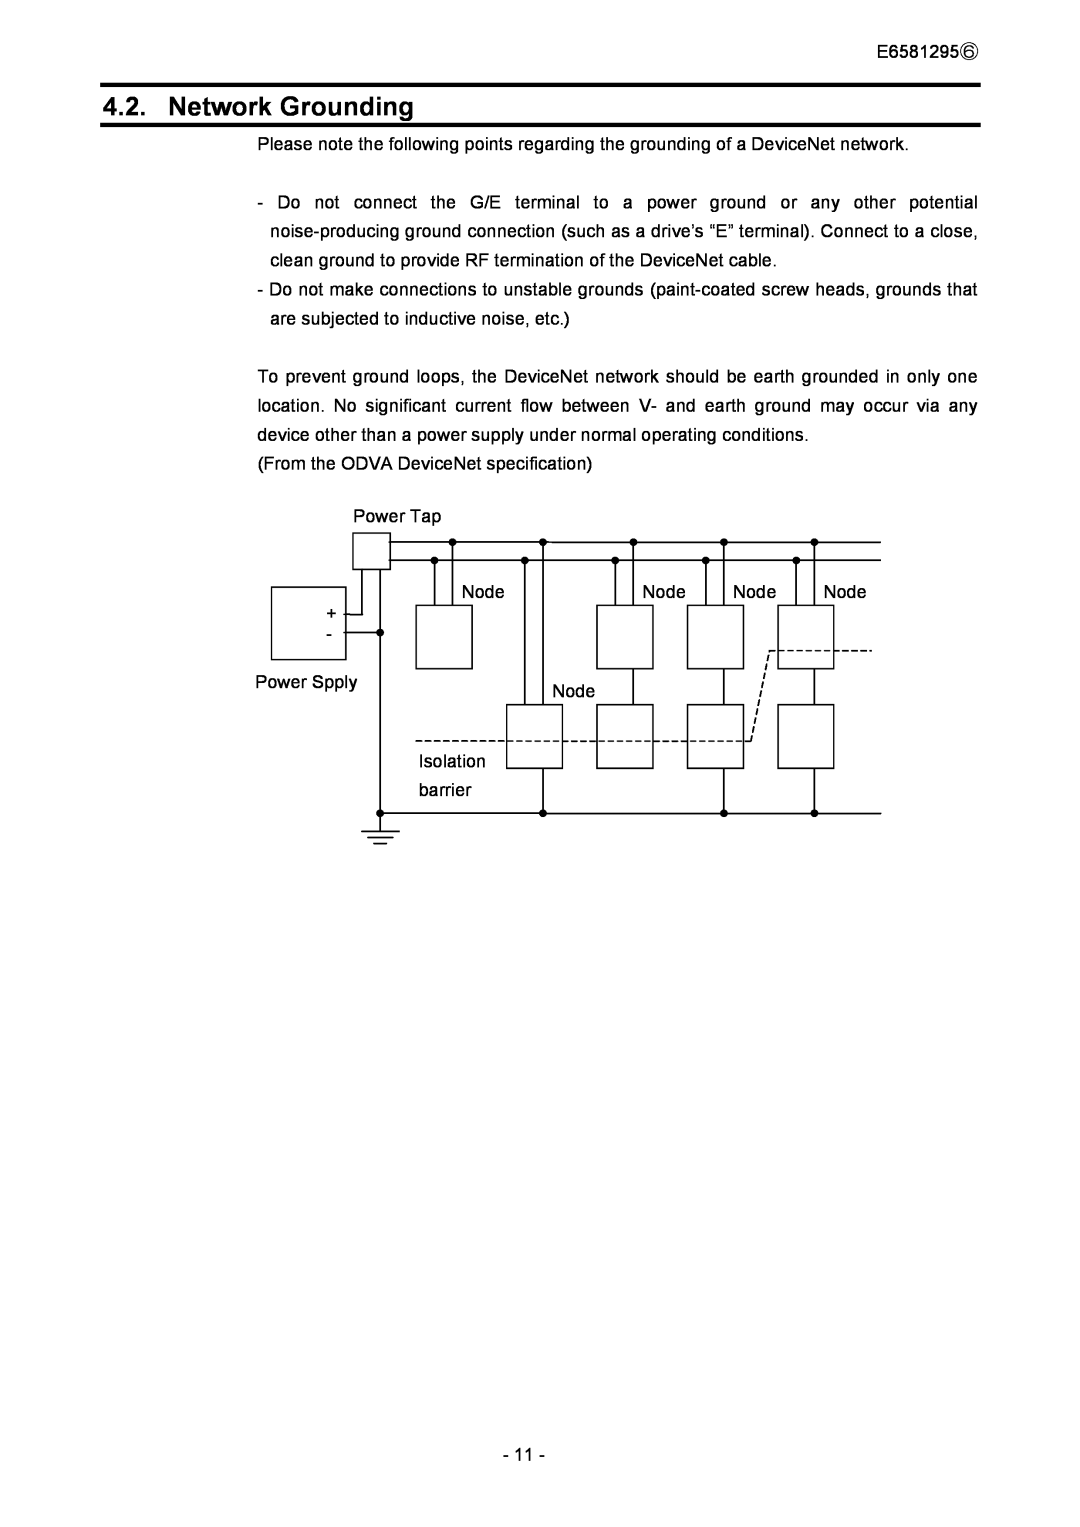 Toshiba DEV002Z instruction manual Network Grounding 